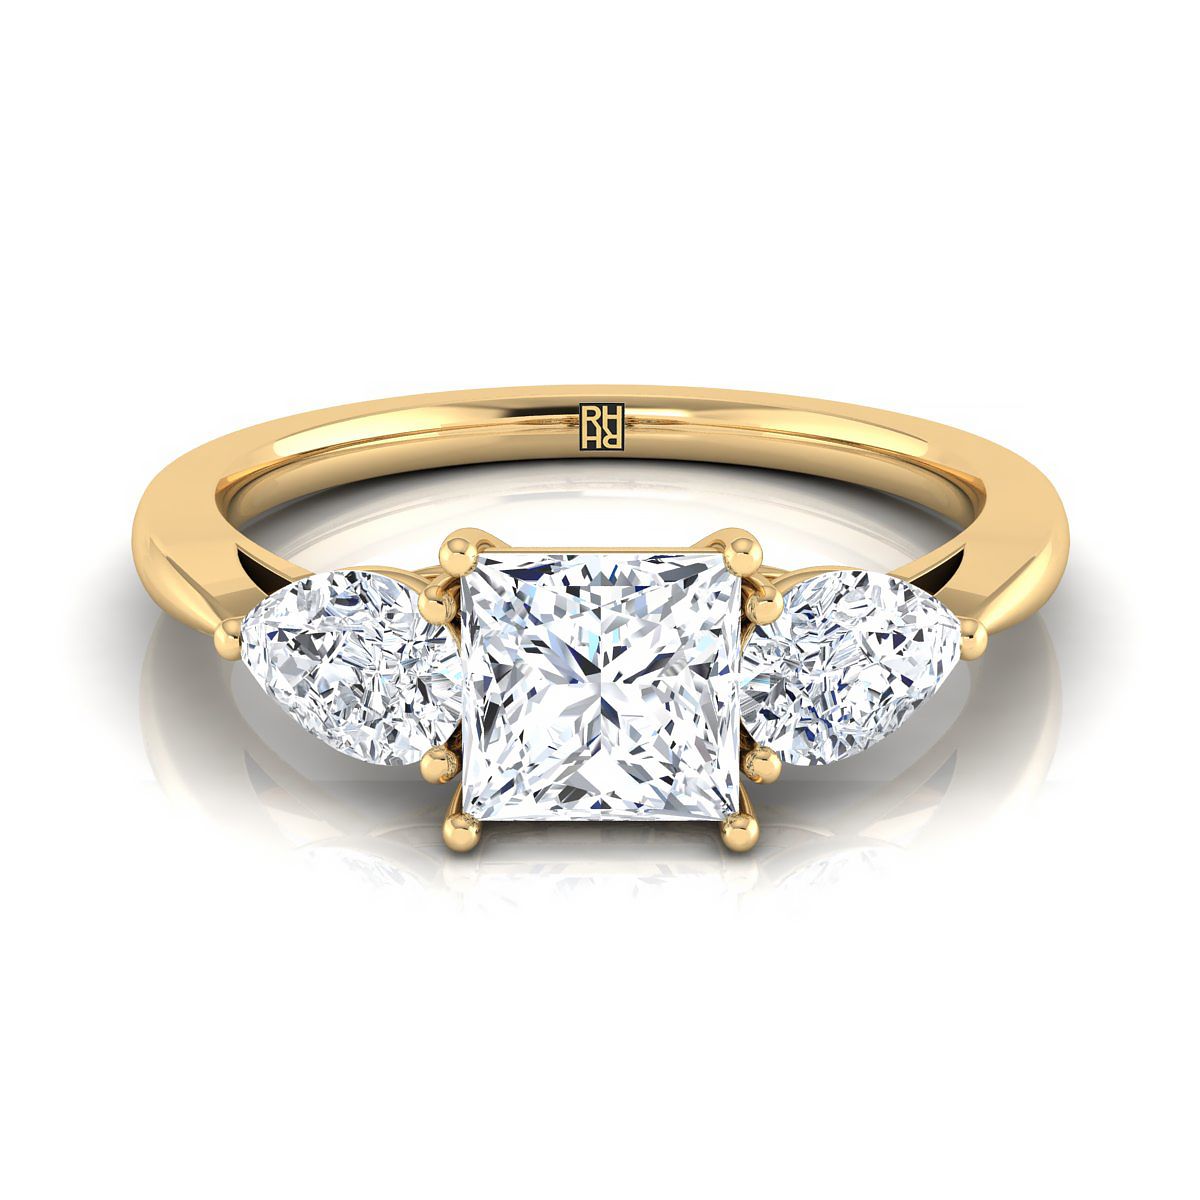 14K Yellow Gold Princess Cut Diamond Perfectly Matched Pear Shaped Three Diamond Engagement Ring -7/8ctw